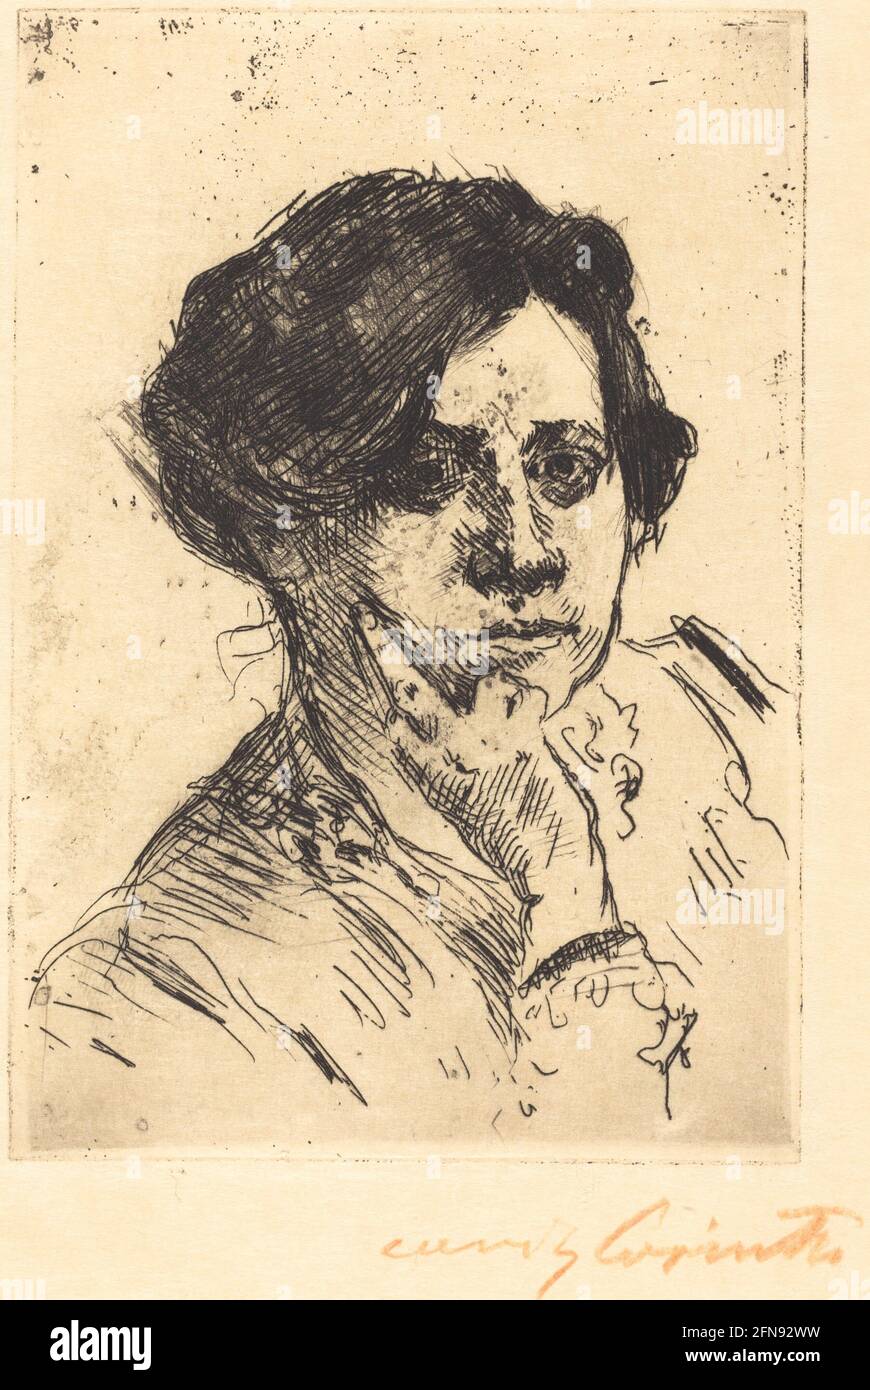 Frauenkopf (Head of Woman), 1911. Stock Photo